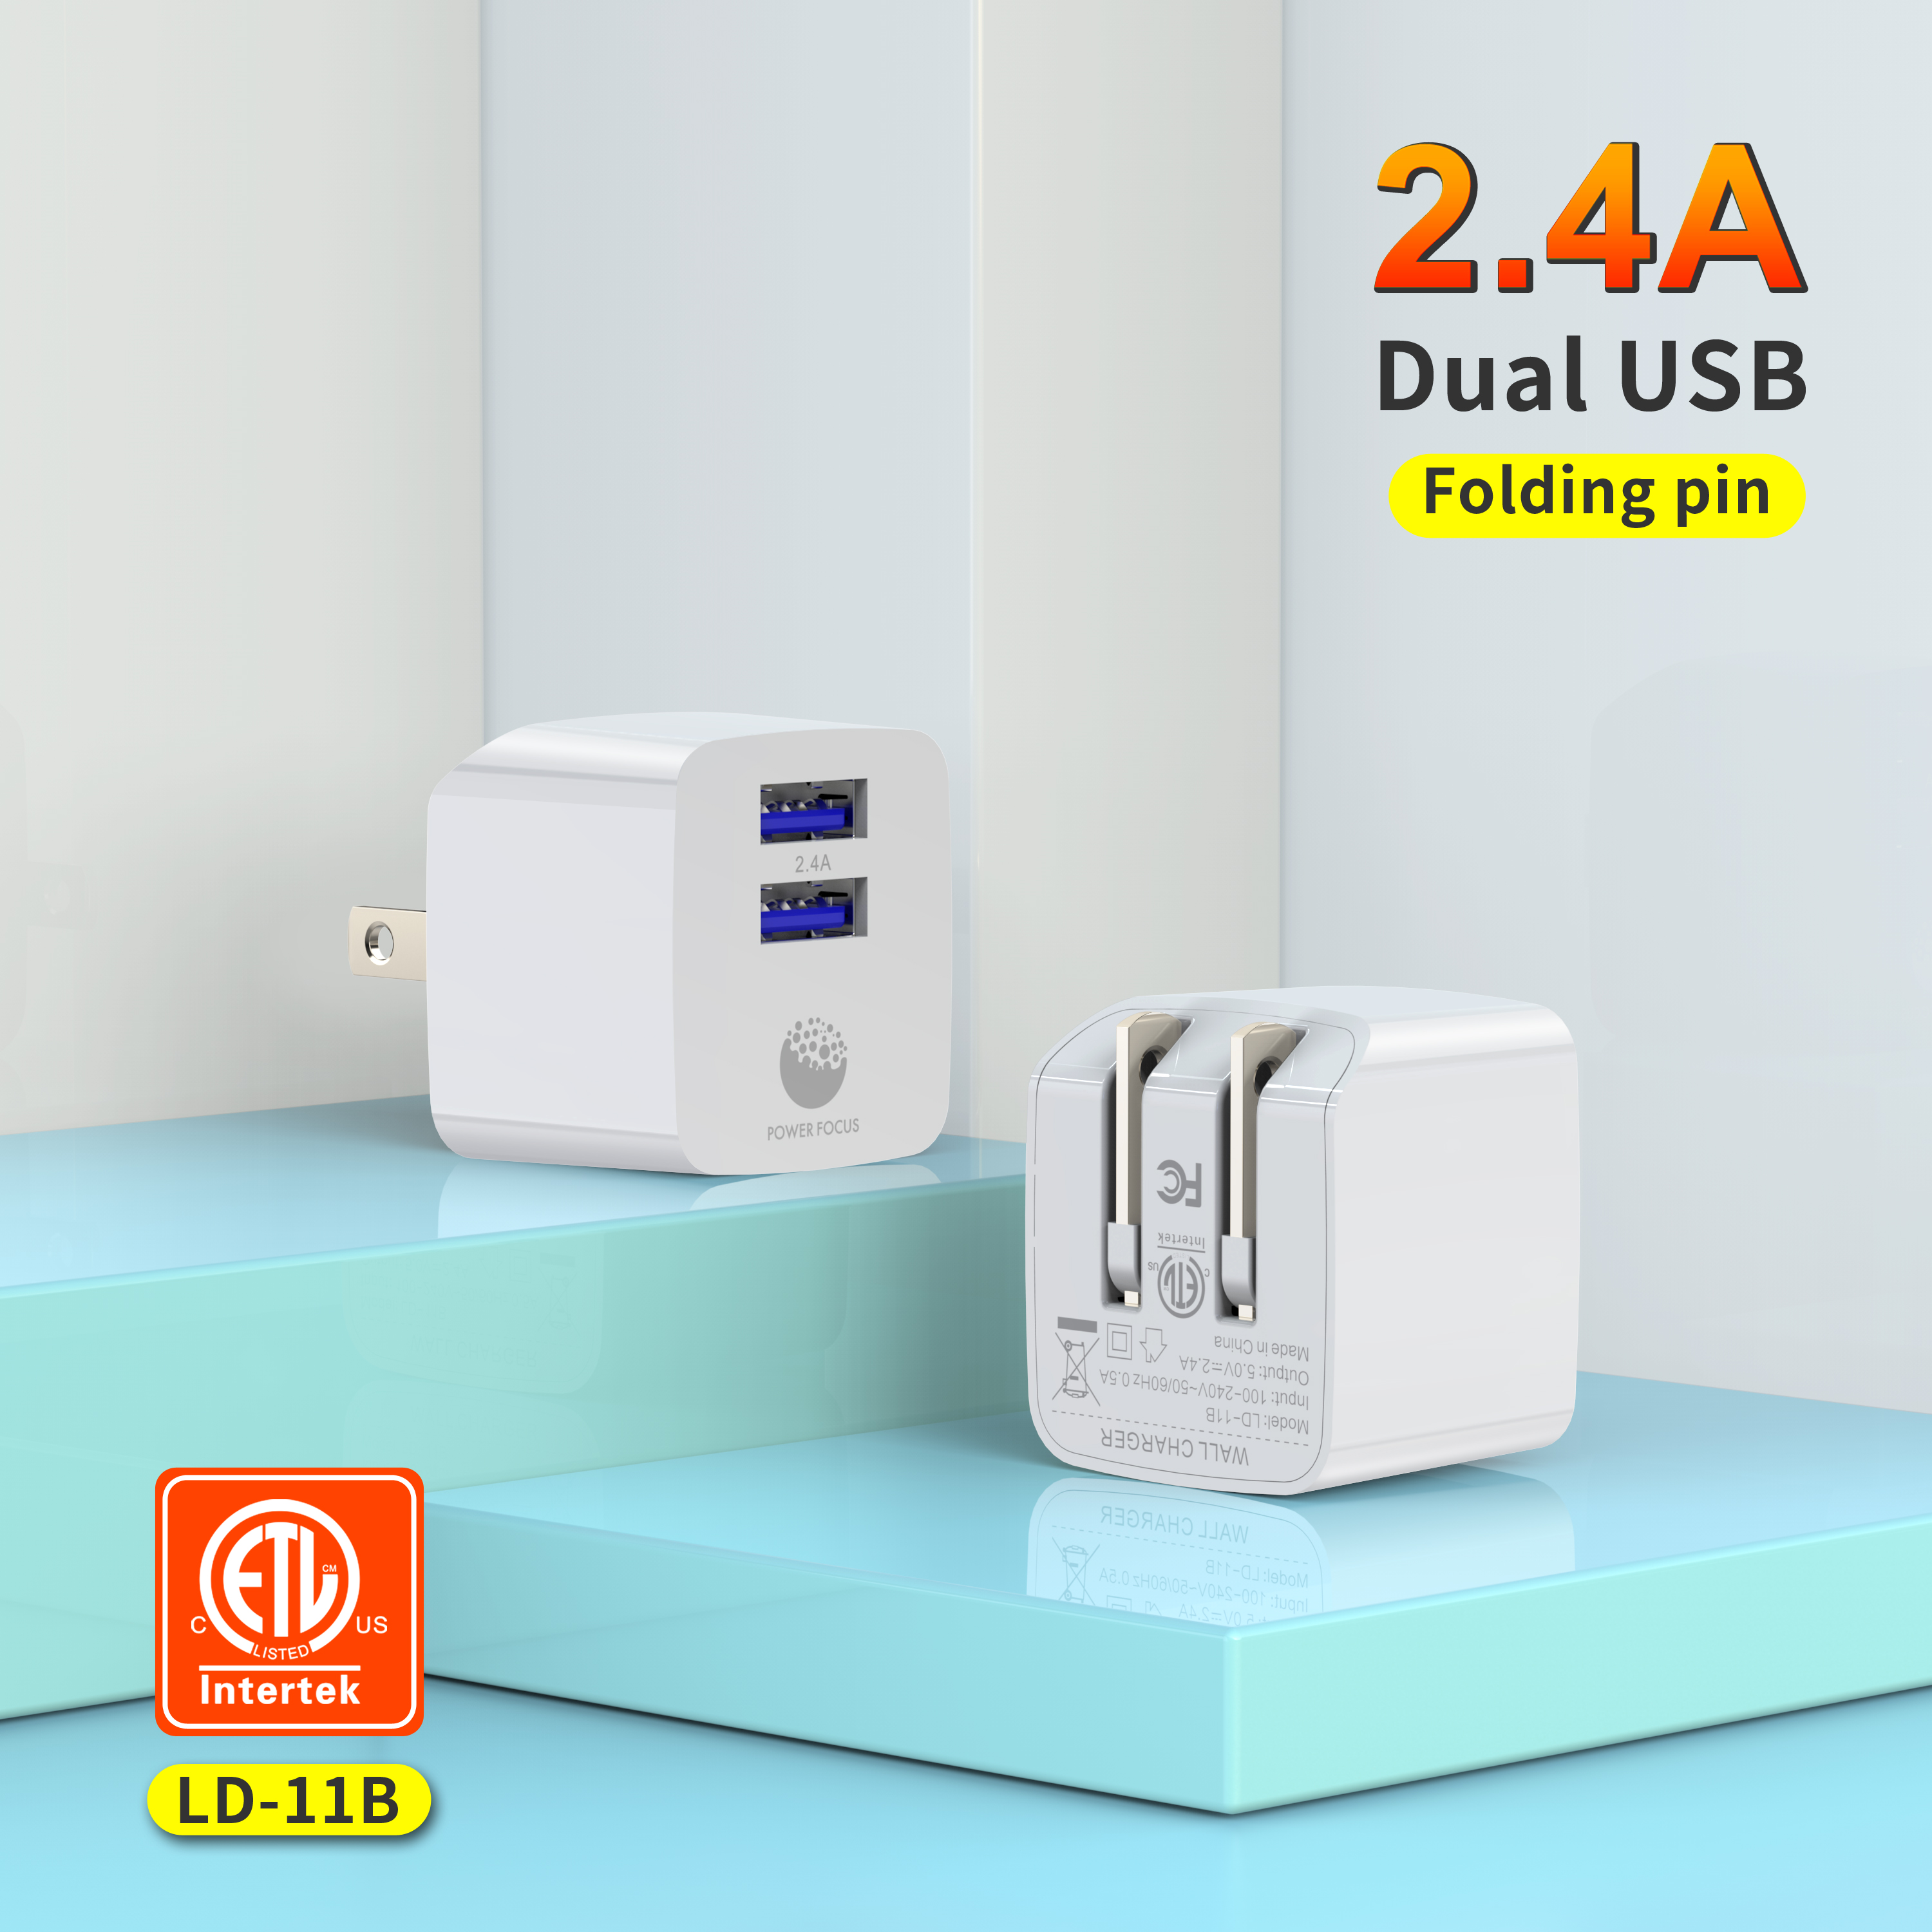 Dual USB folding plug Manufacturers, Dual USB folding plug Factory, Supply Dual USB folding plug